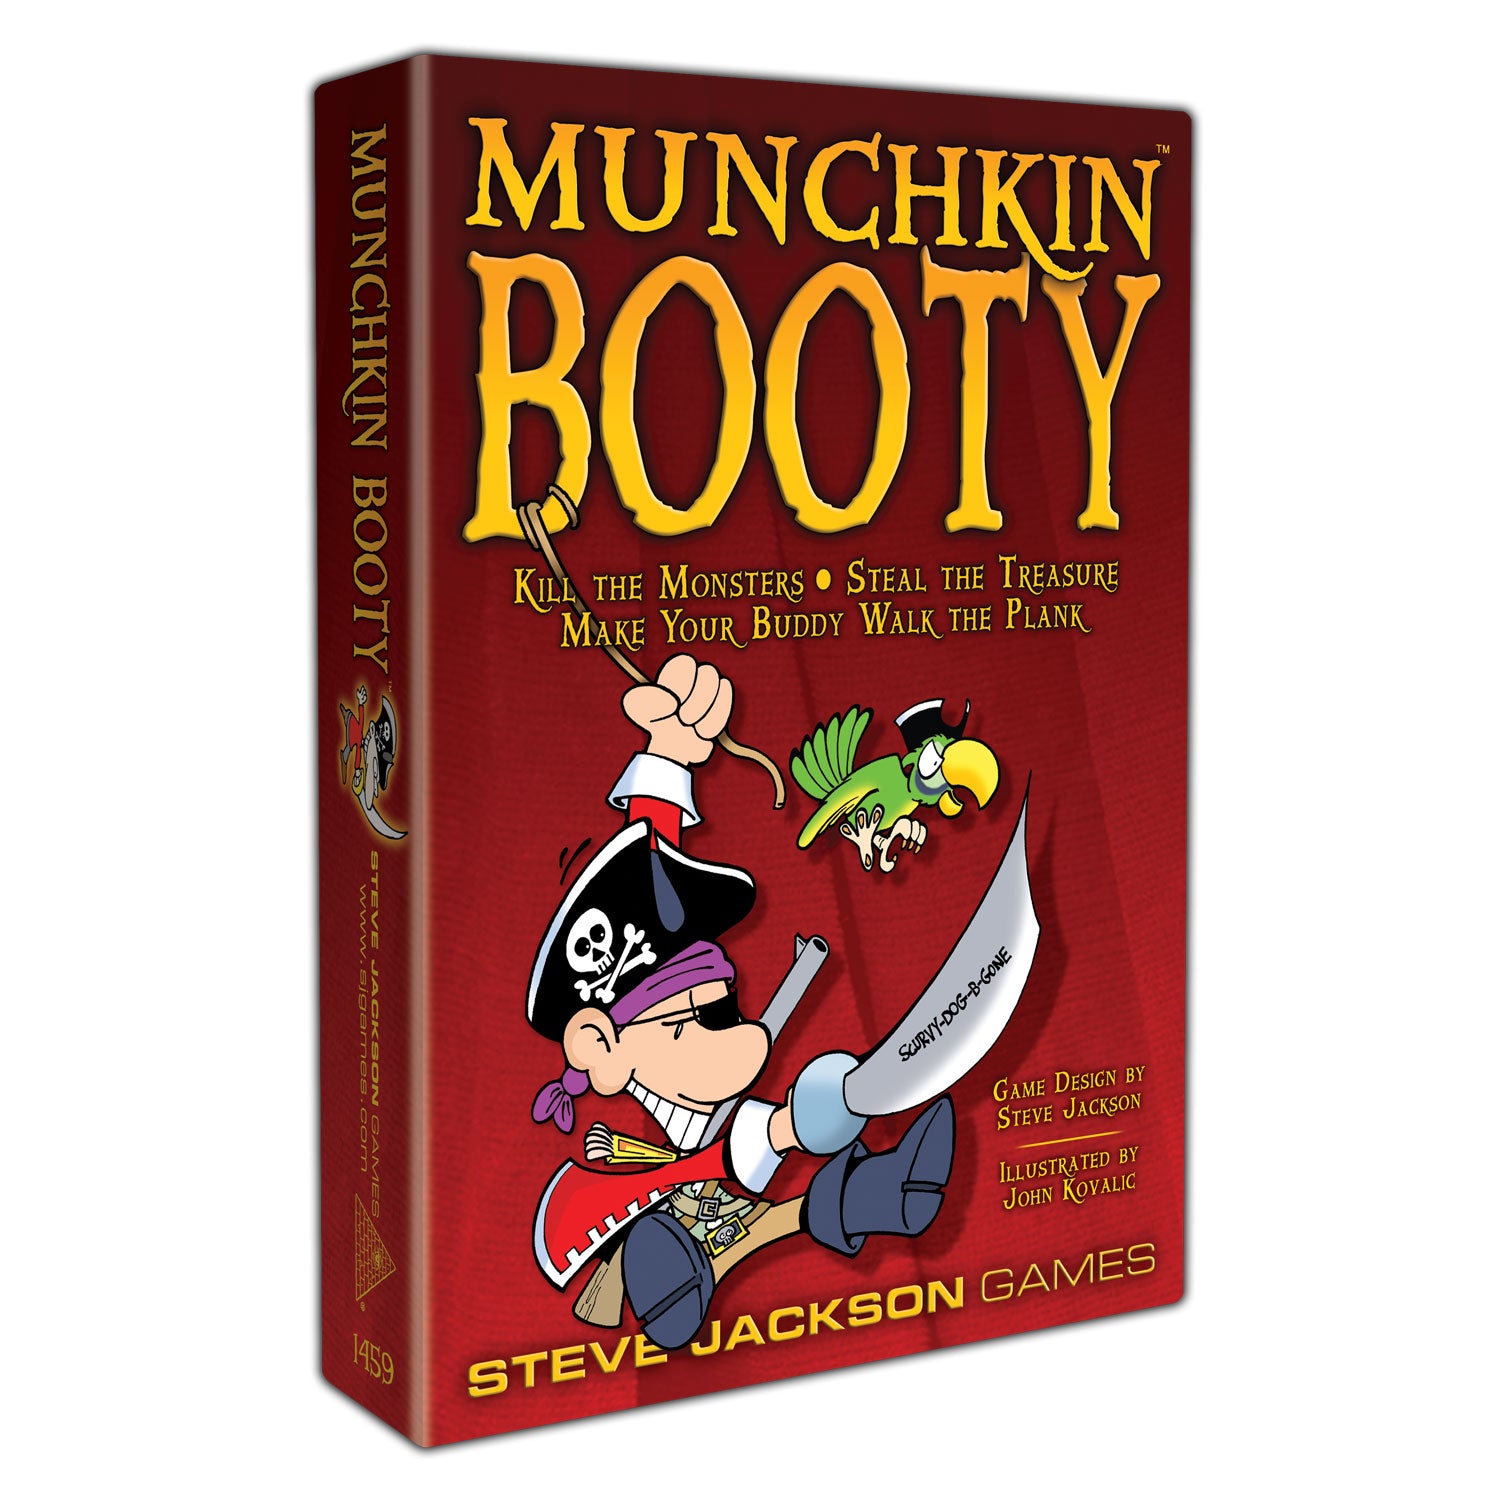 Munchkin: Munchkin Booty (Revised) - Bards & Cards